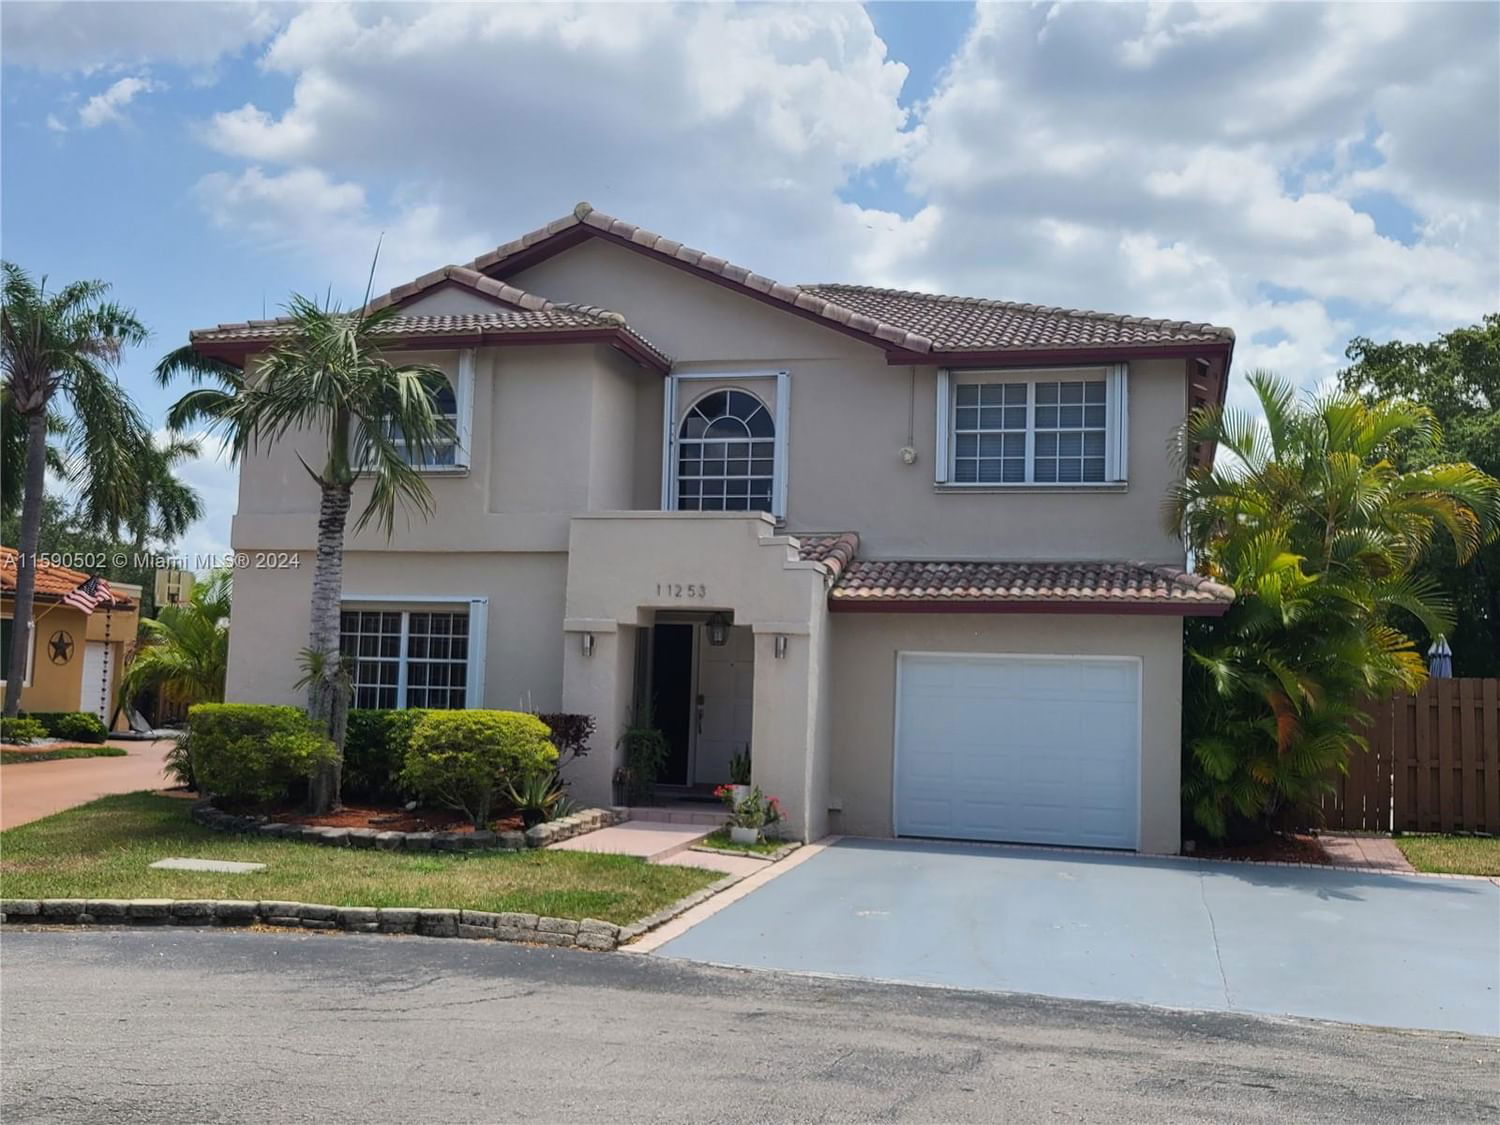 Real estate property located at 11253 159th Pl, Miami-Dade County, CHANTARELLE AT THE HAMMOC, Miami, FL